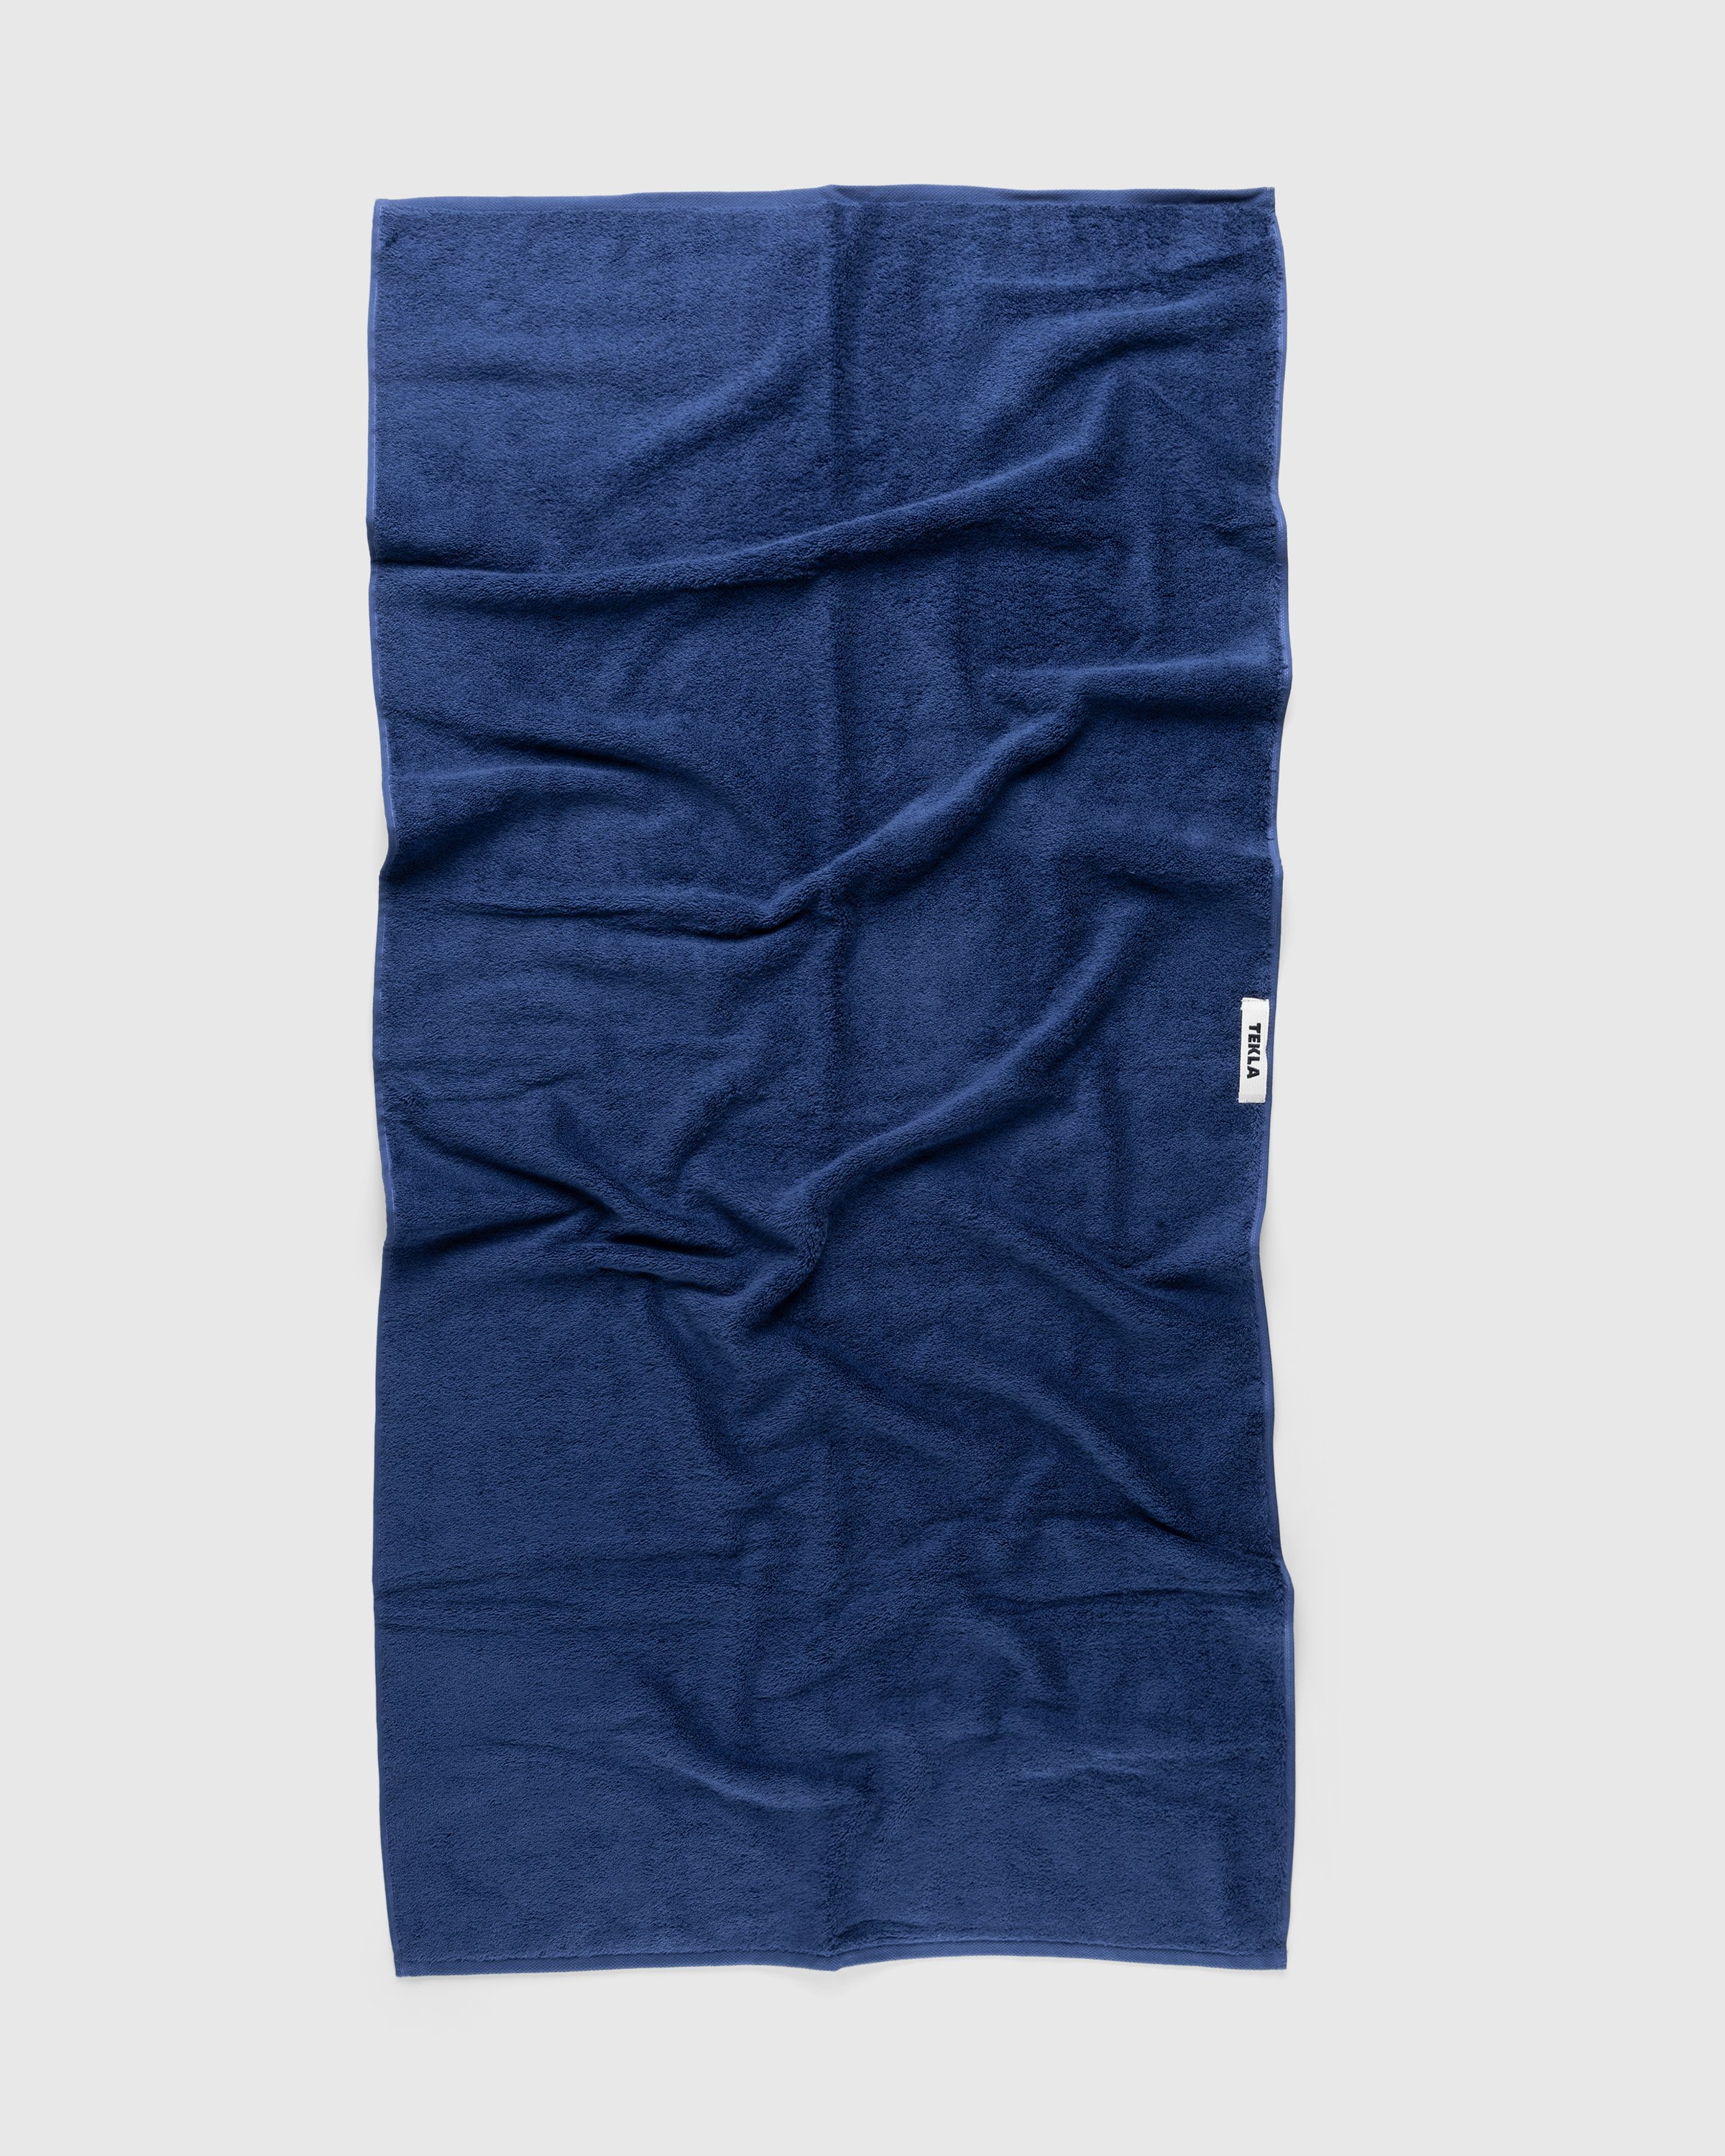 Tekla - Bath Towel 70x140 Navy - Lifestyle - Blue - Image 1